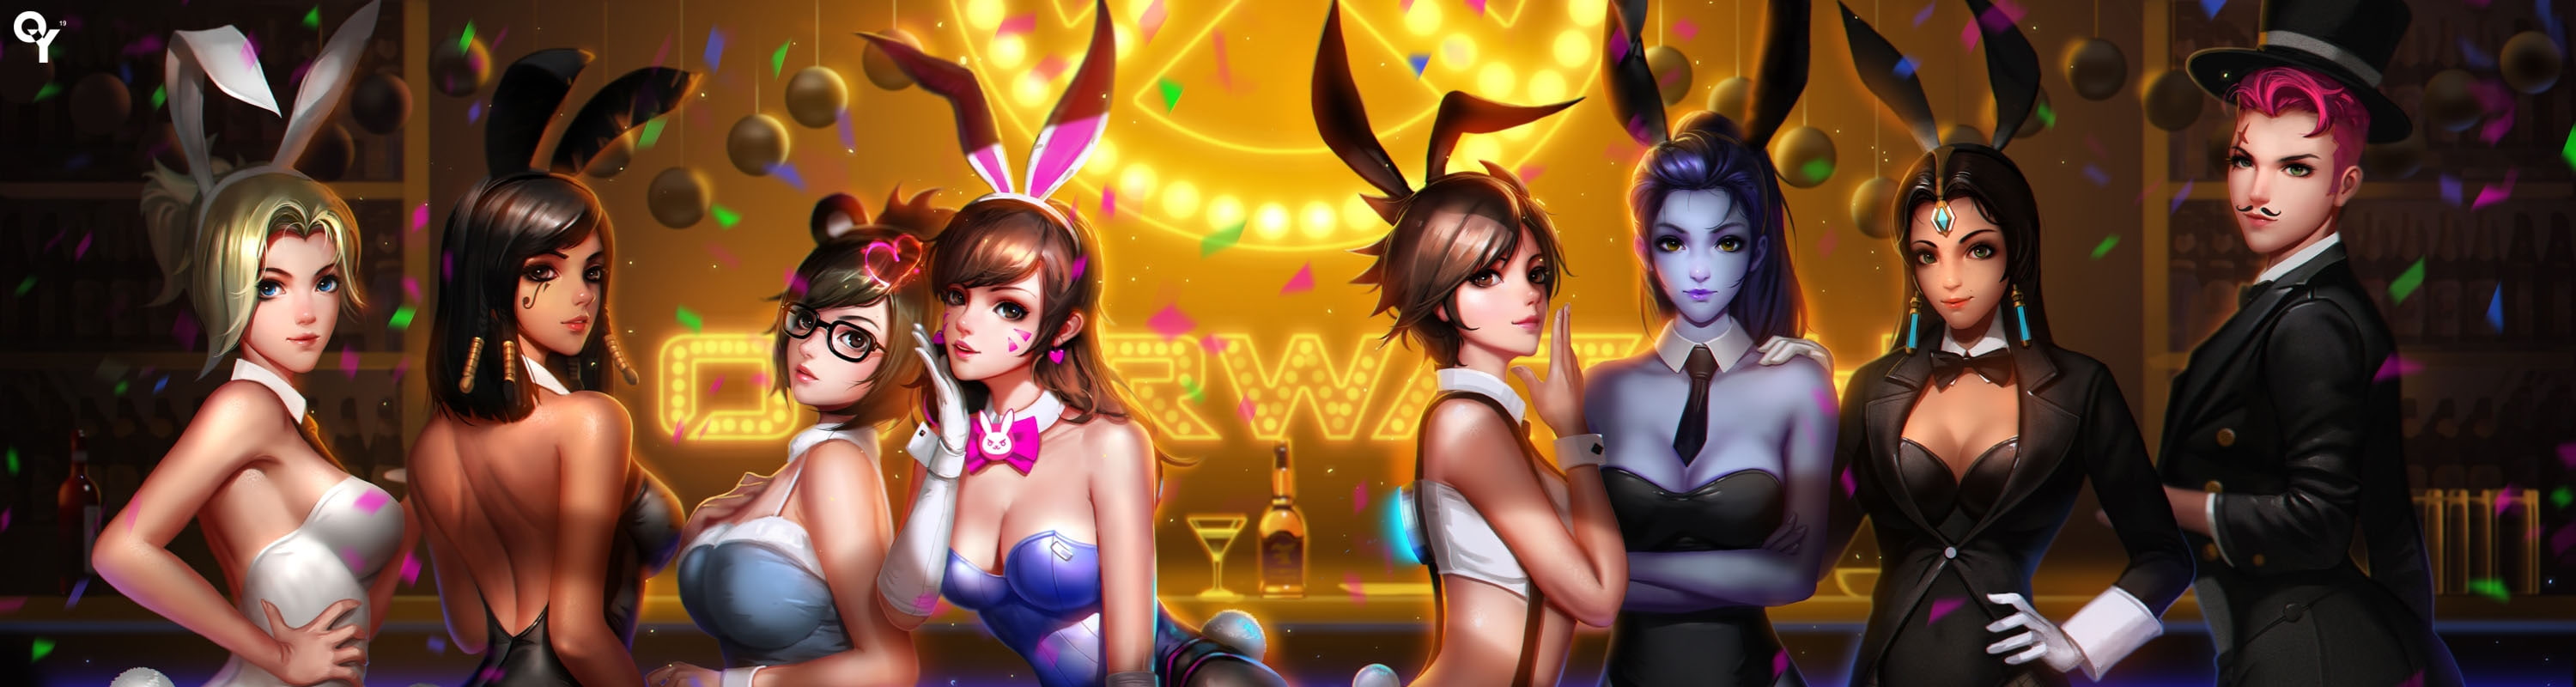 female game character wallpaper, overwatch, bunny costume, d.va